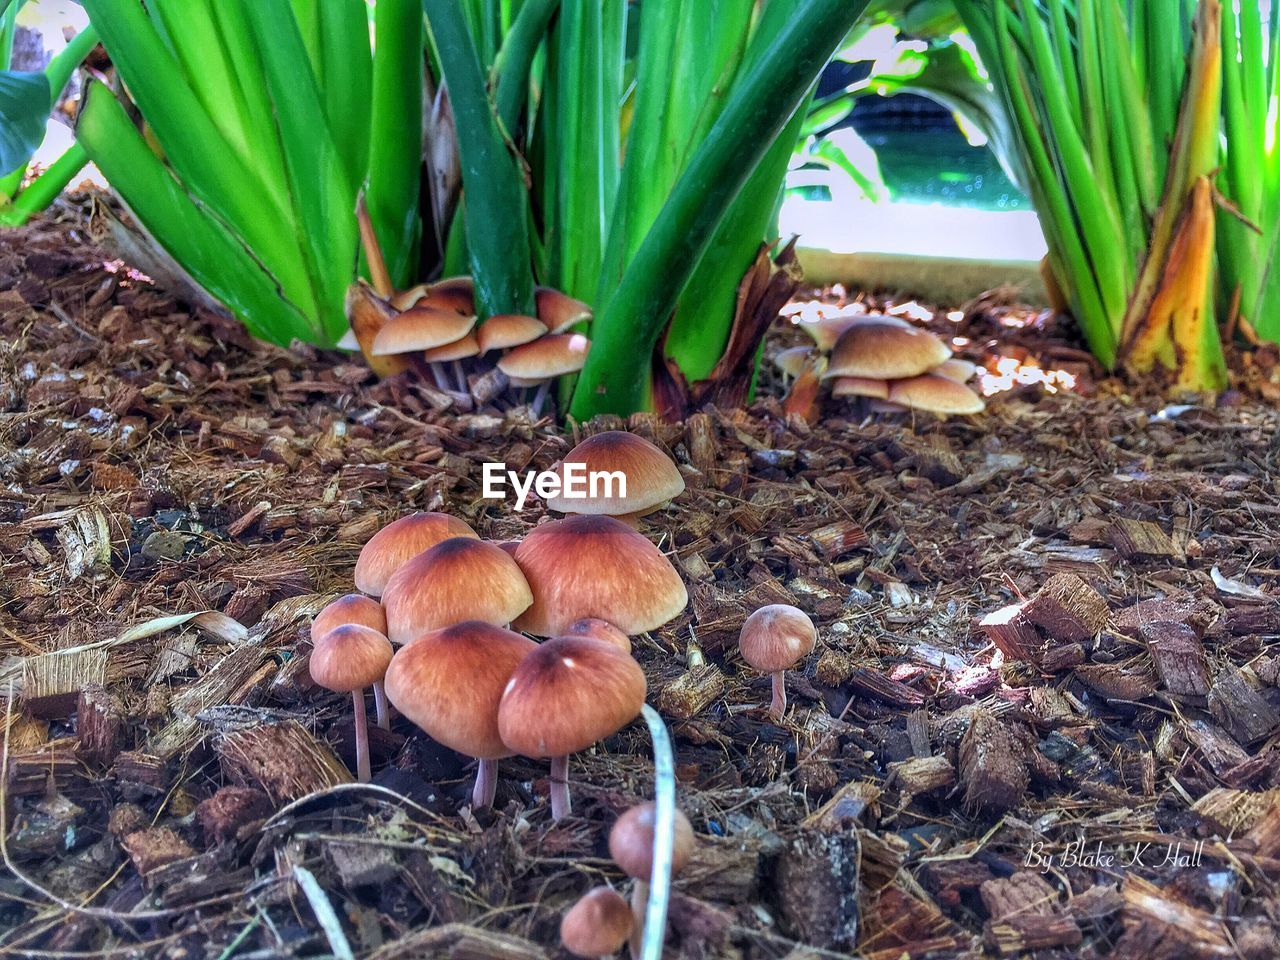 Wild mushrooms growing on field